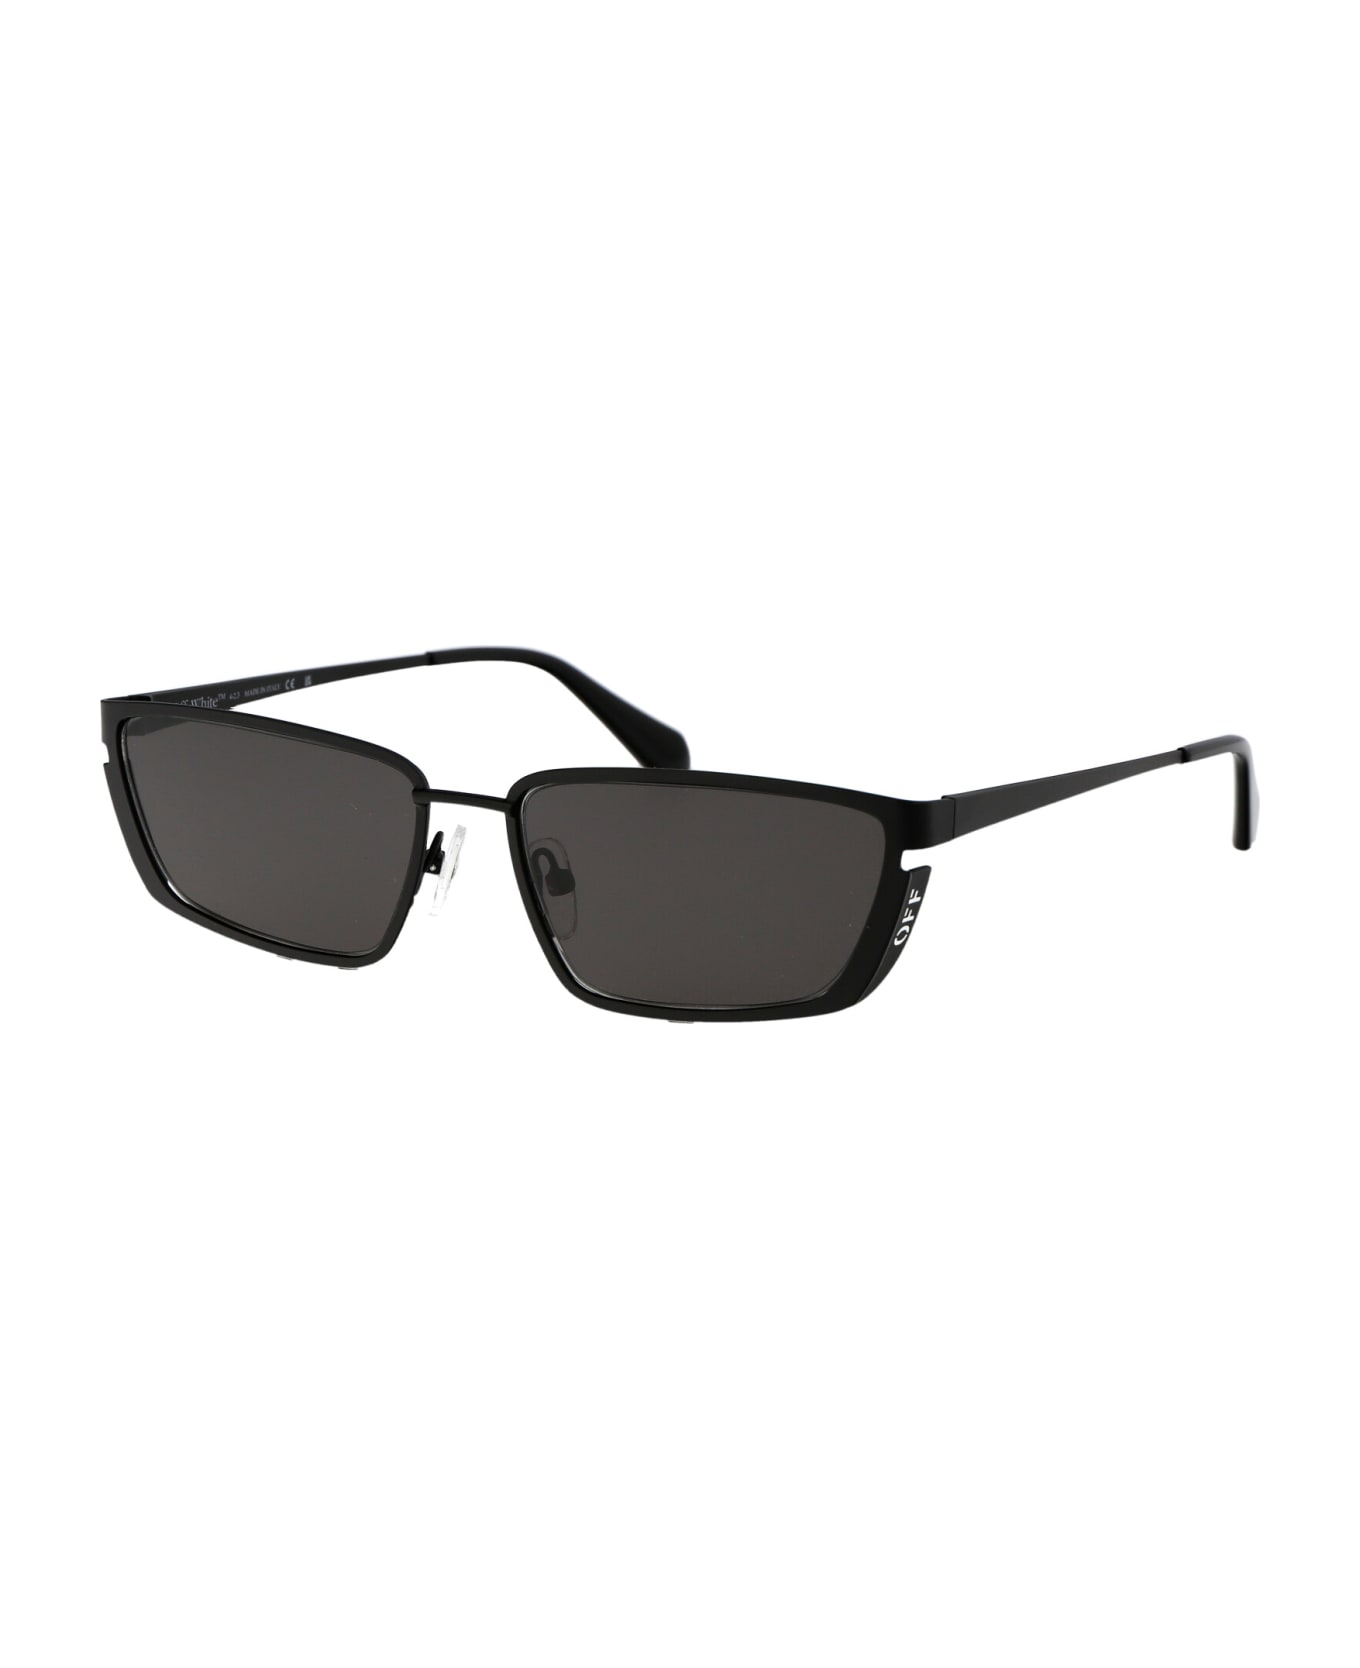 Off-White Richfield Sunglasses - 1007 BLACK サングラス